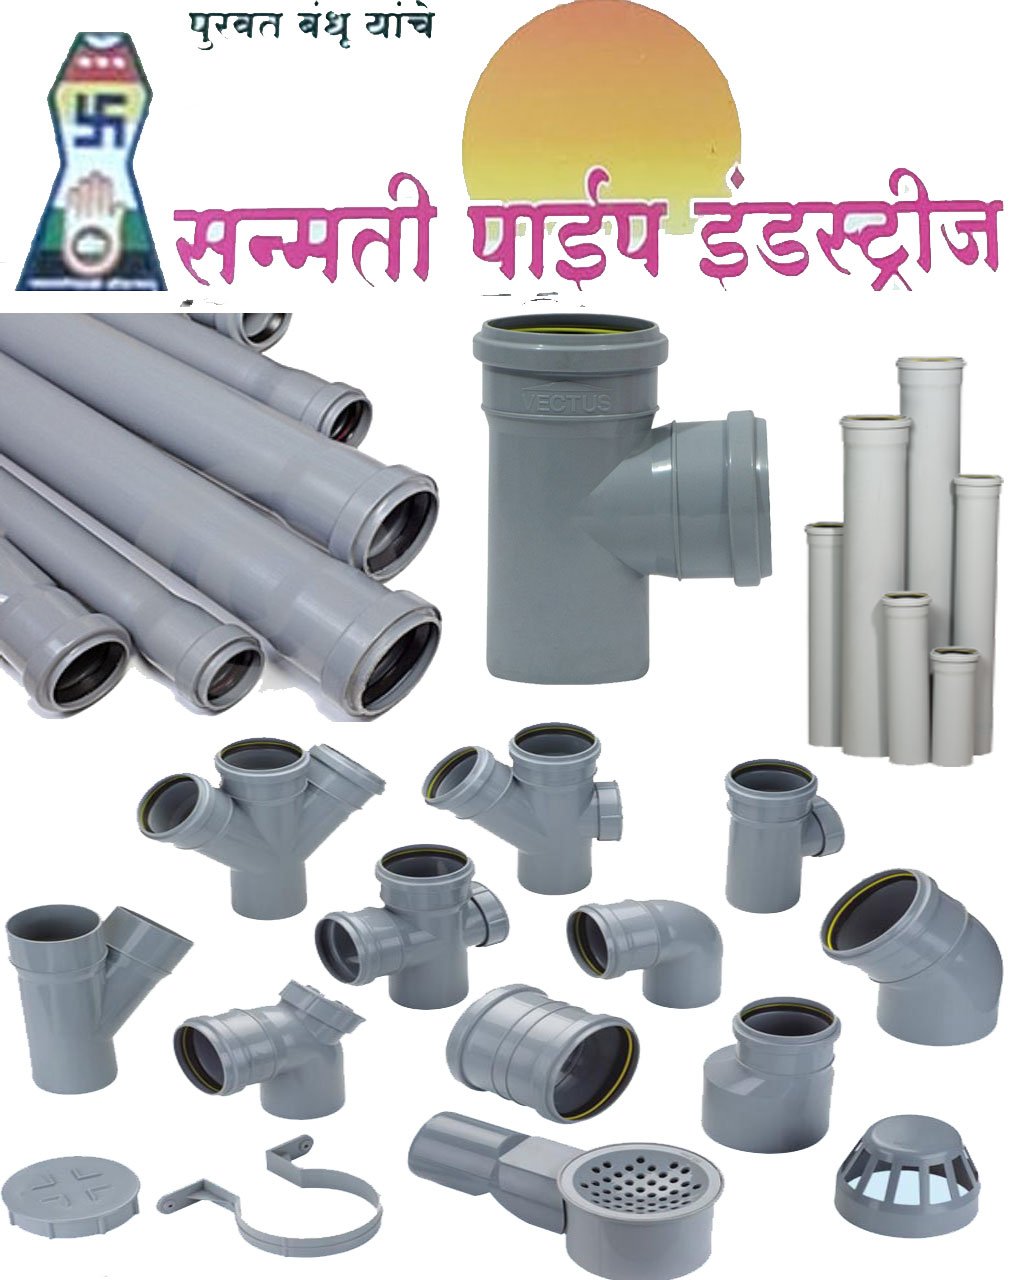 Sanmati Pipe Industries| SolapurMall.com